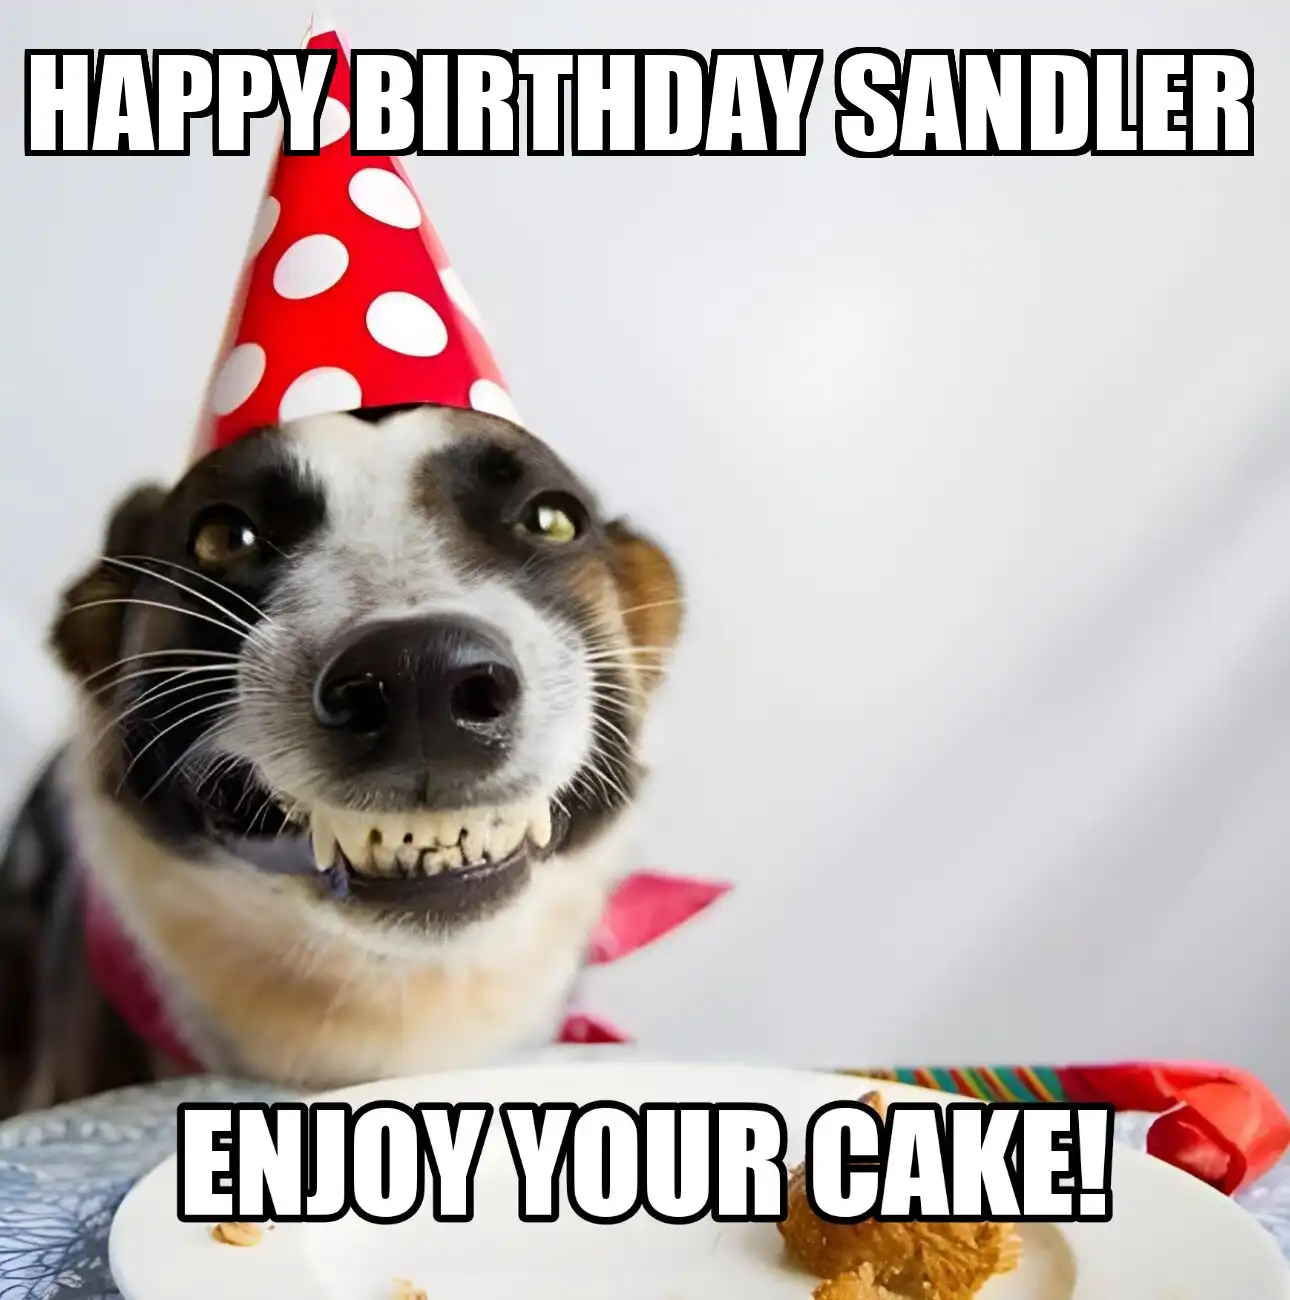 Happy Birthday Sandler Enjoy Your Cake Dog Meme